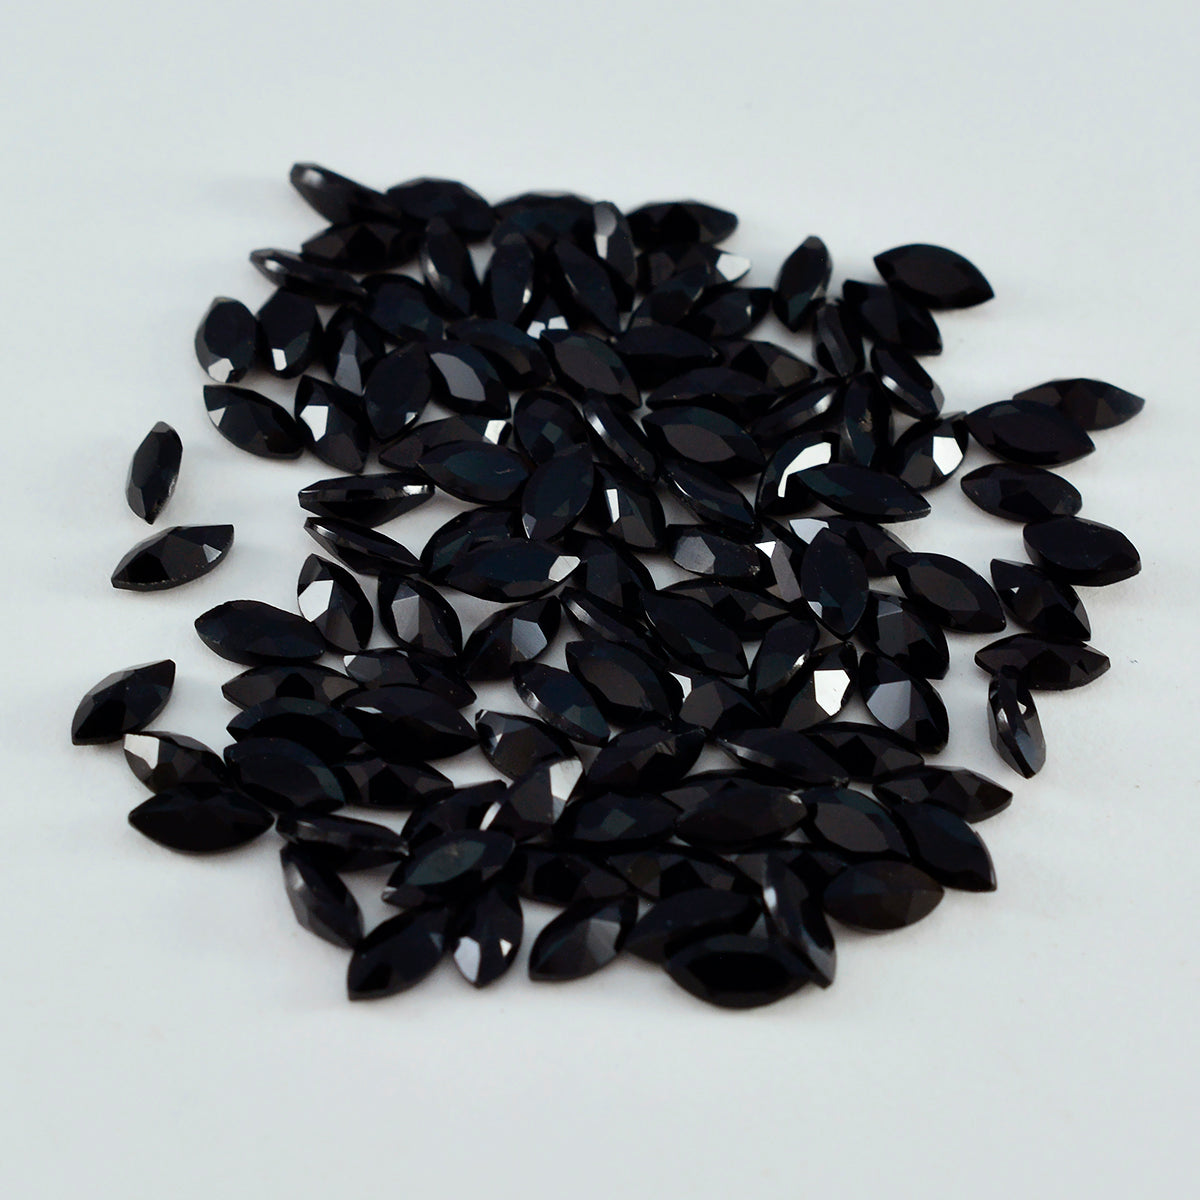 Riyogems 1PC Real Black Onyx Faceted 3X6 mm Marquise Shape beautiful Quality Stone